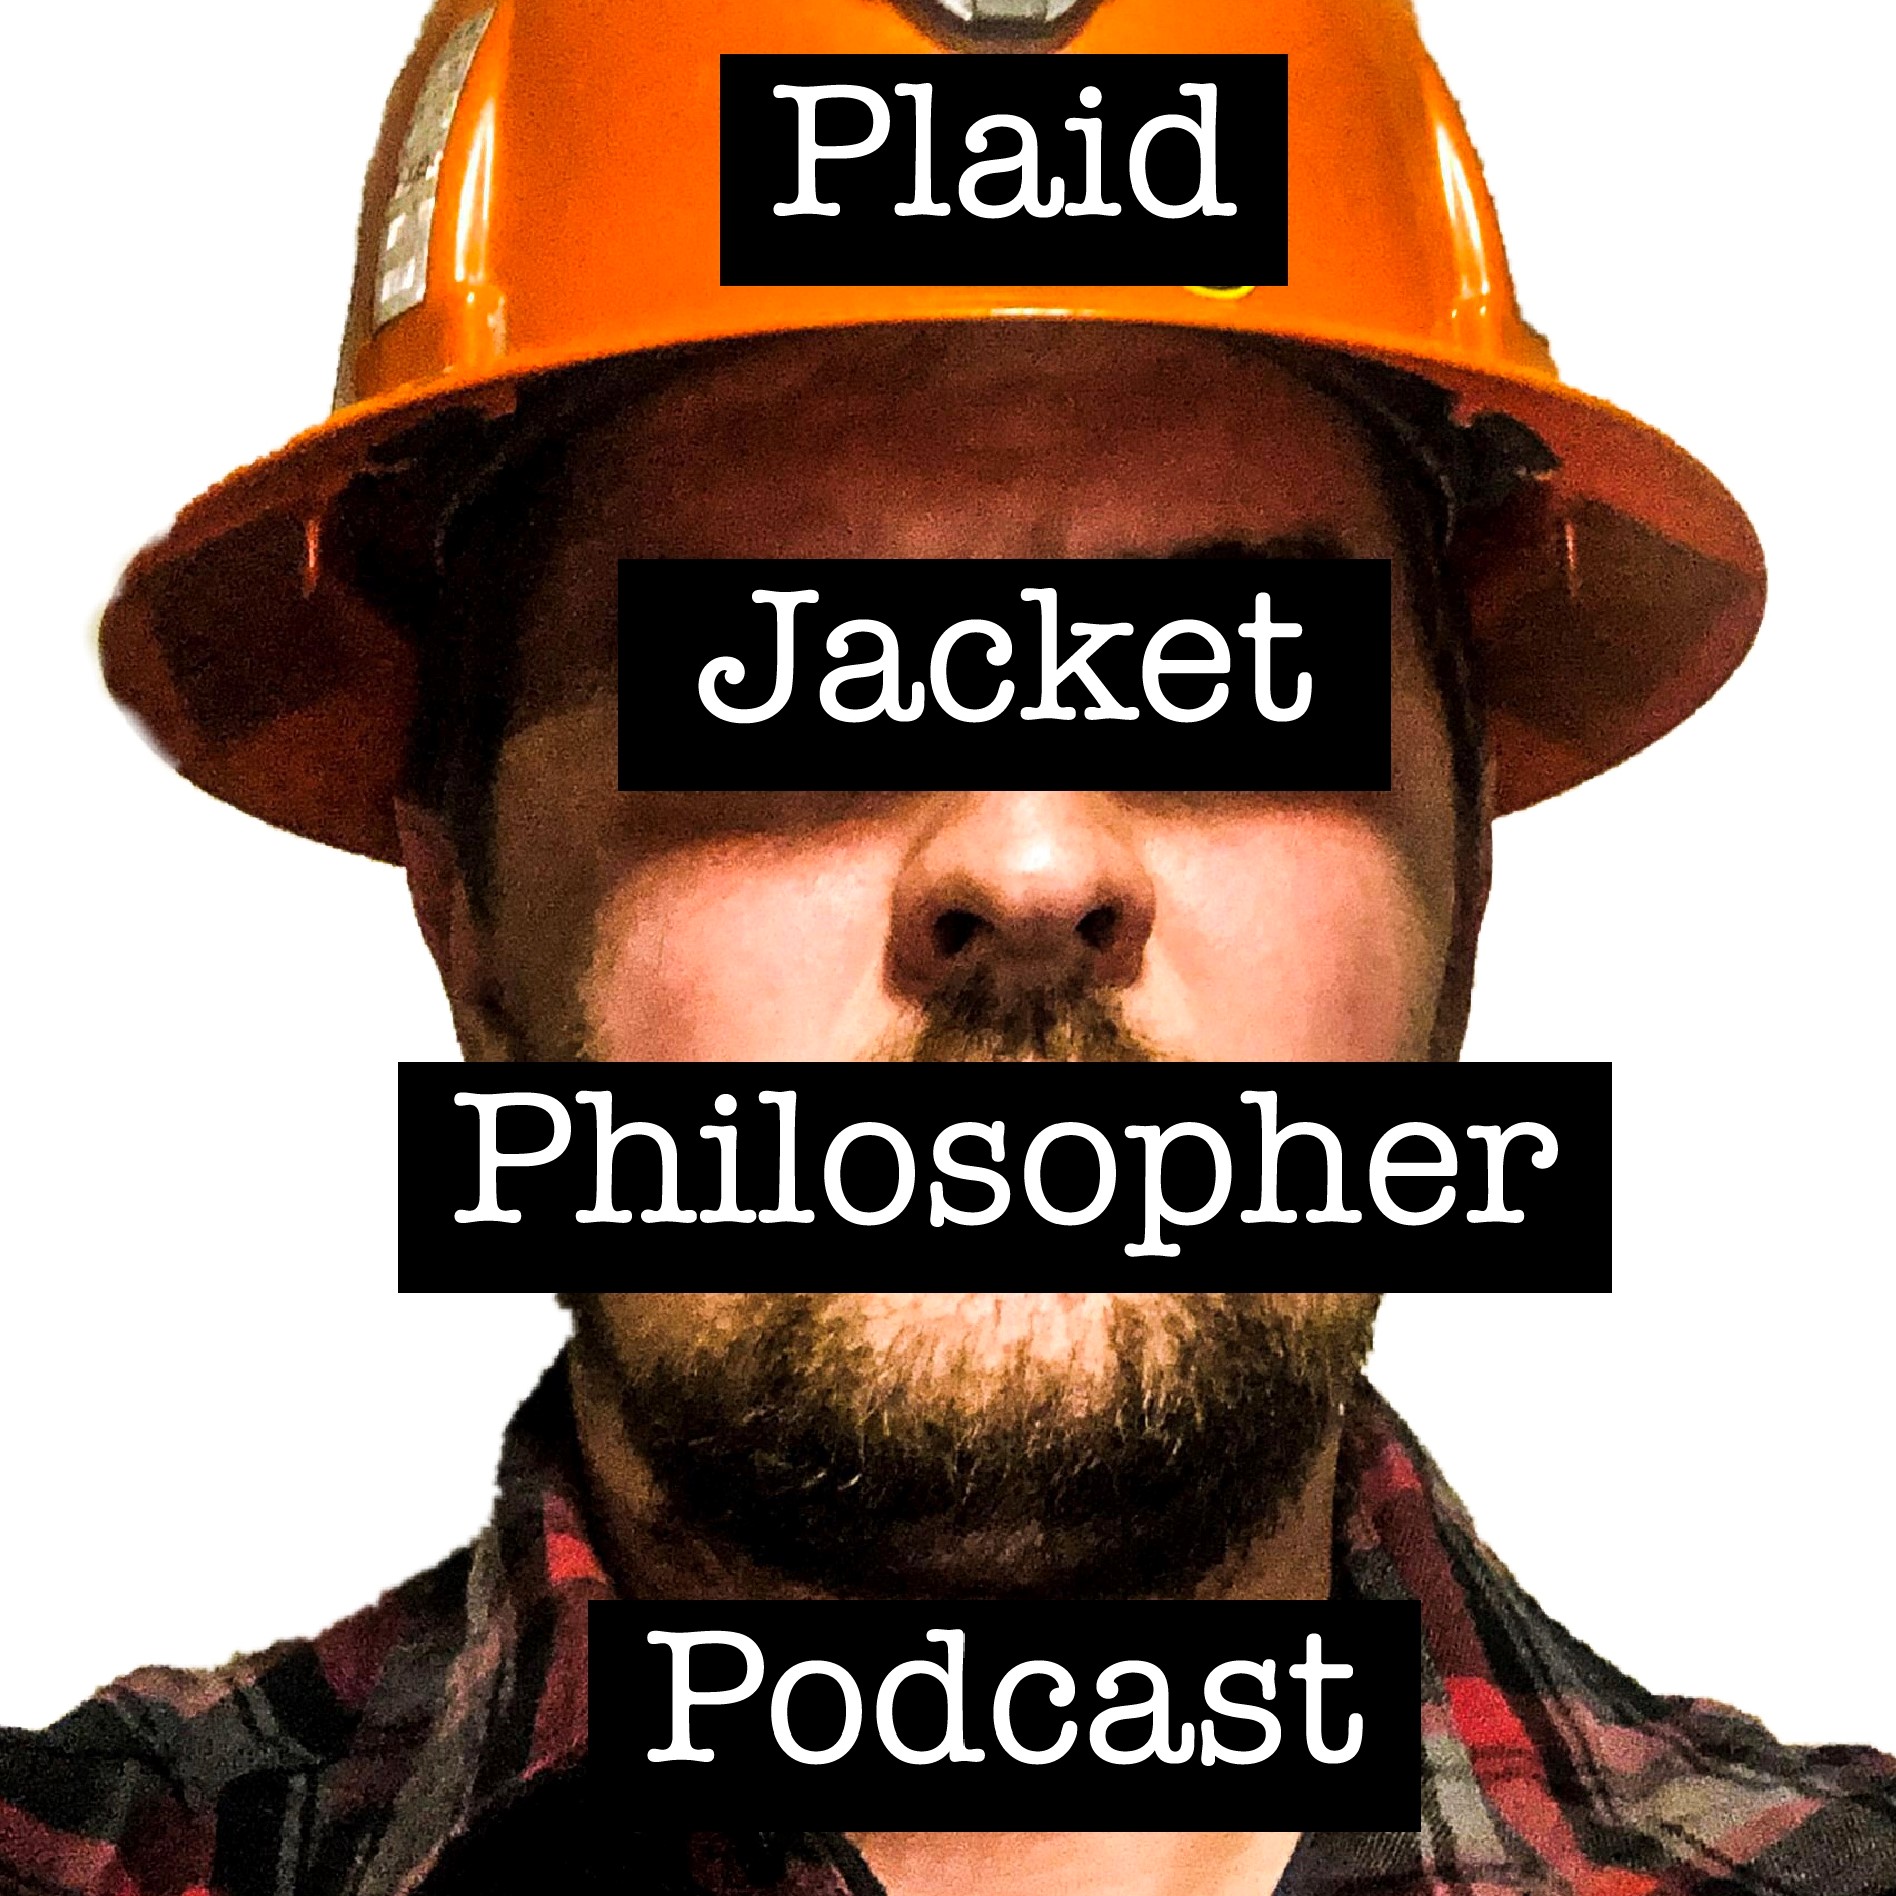 The Plaid Jacket Philosopher’s Podcast